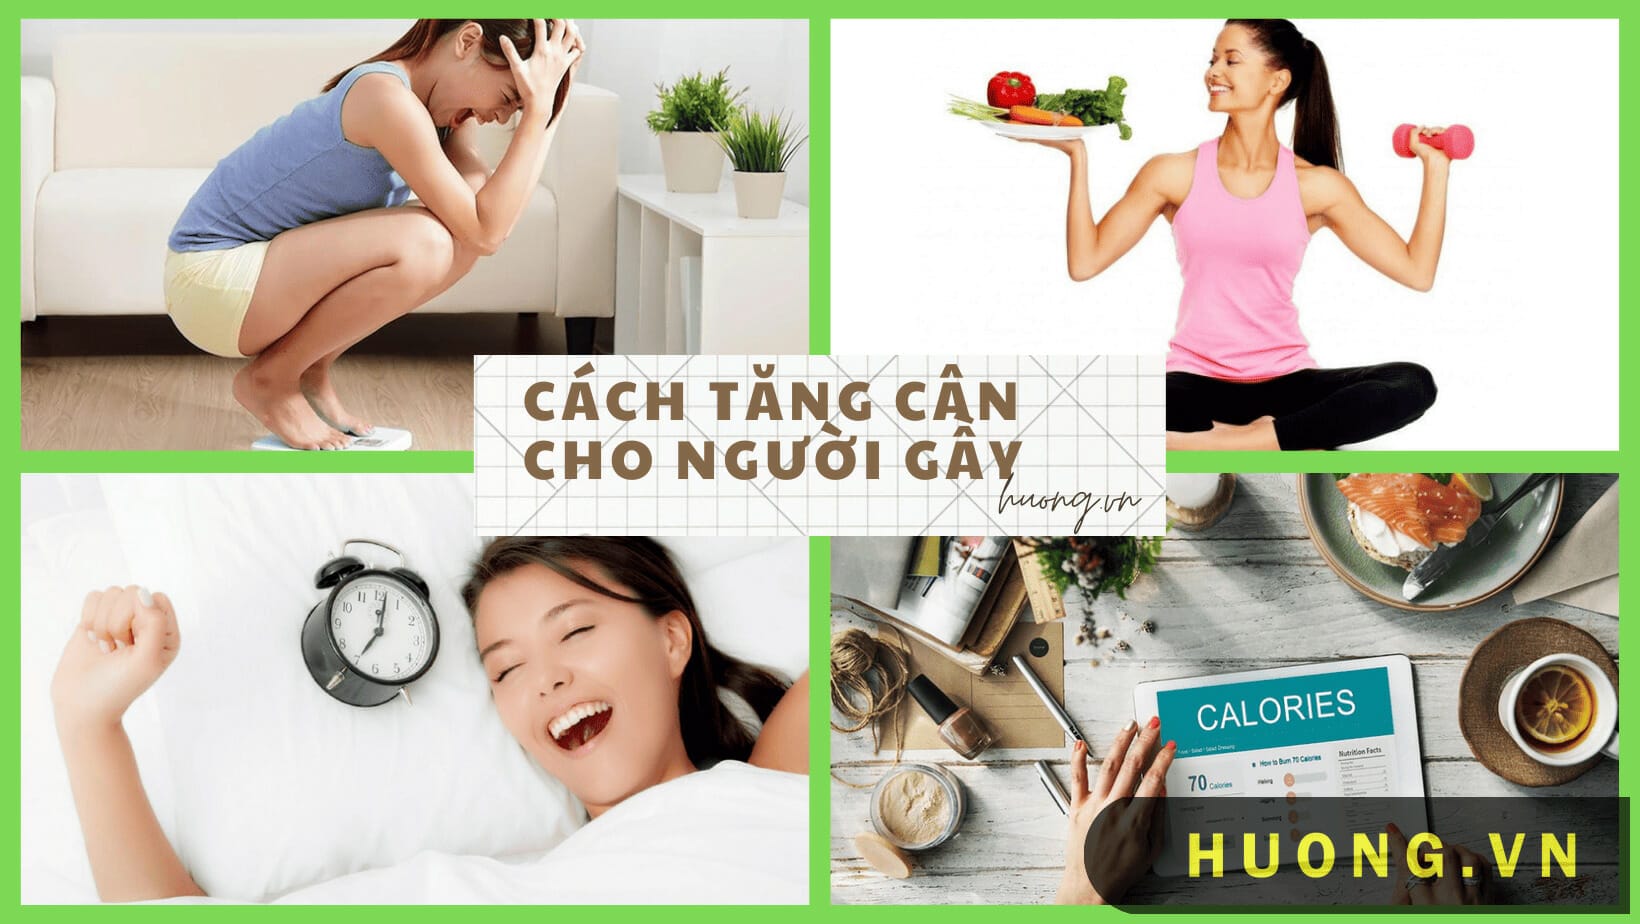 cach tang can cho nguoi gay lau nam.8 1